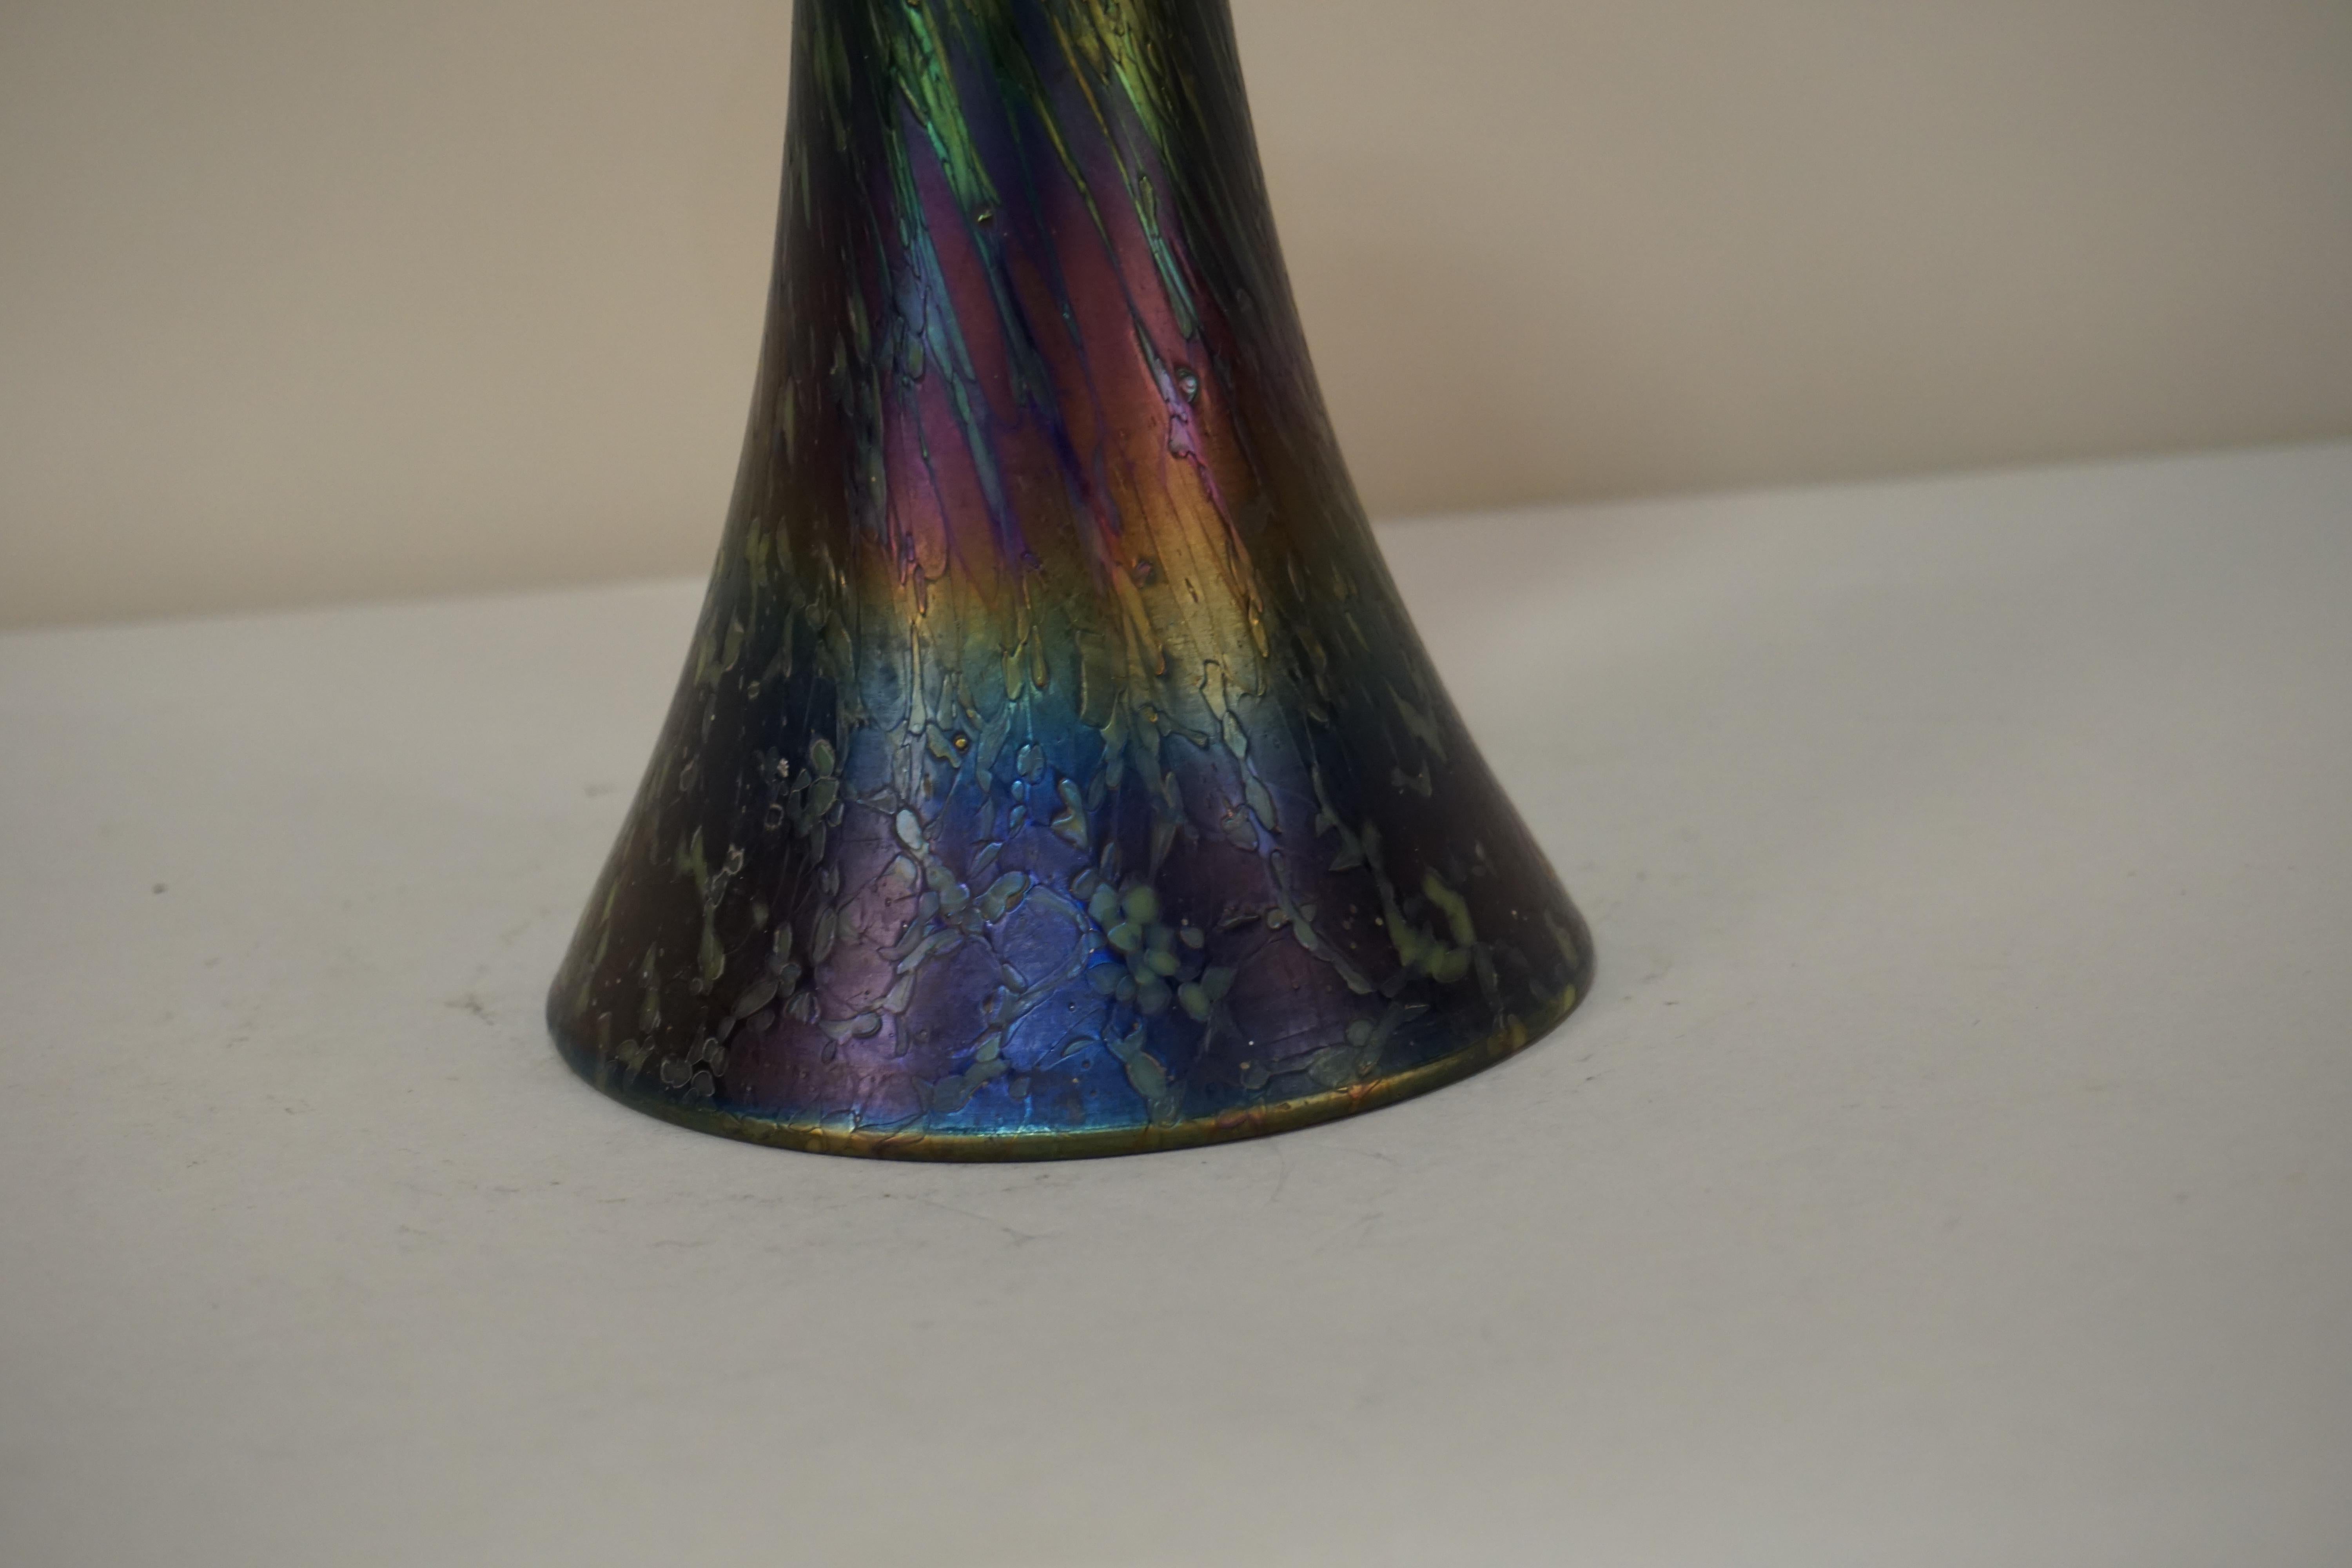 Beautiful art glass vase with iridescent glaze.